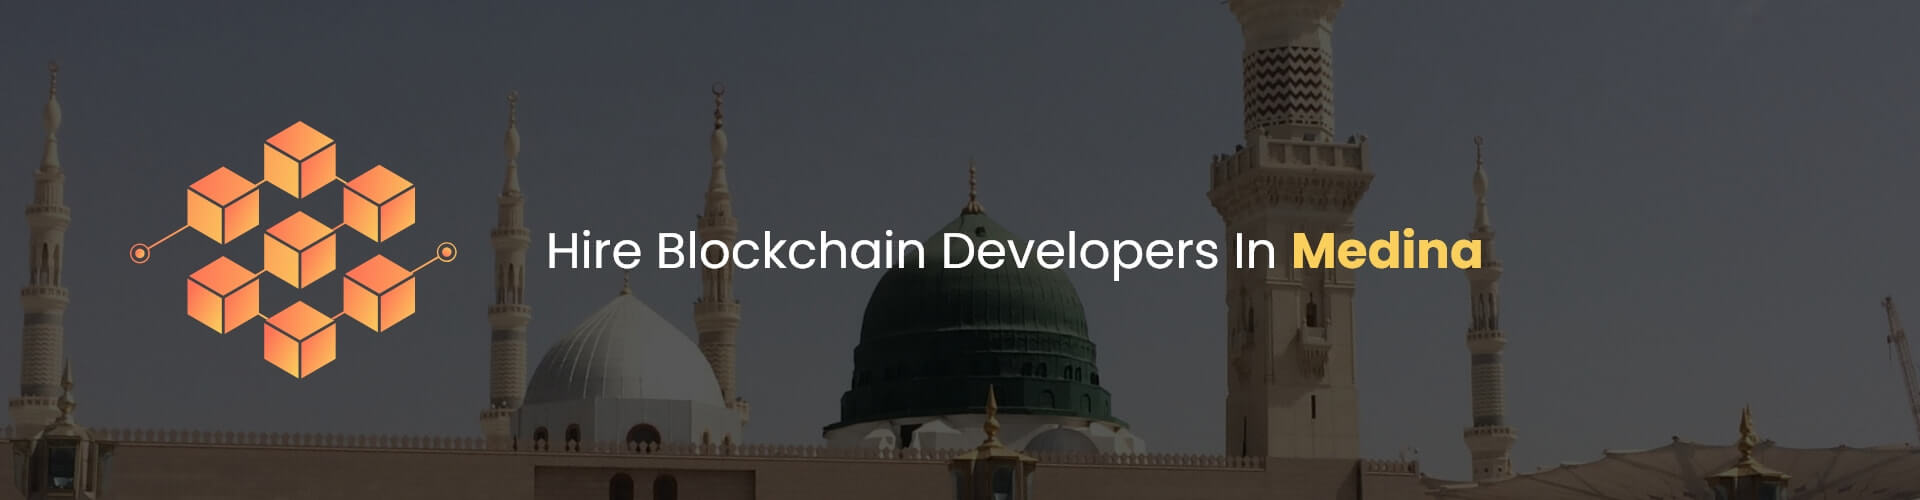 hire blockchain developers in medina